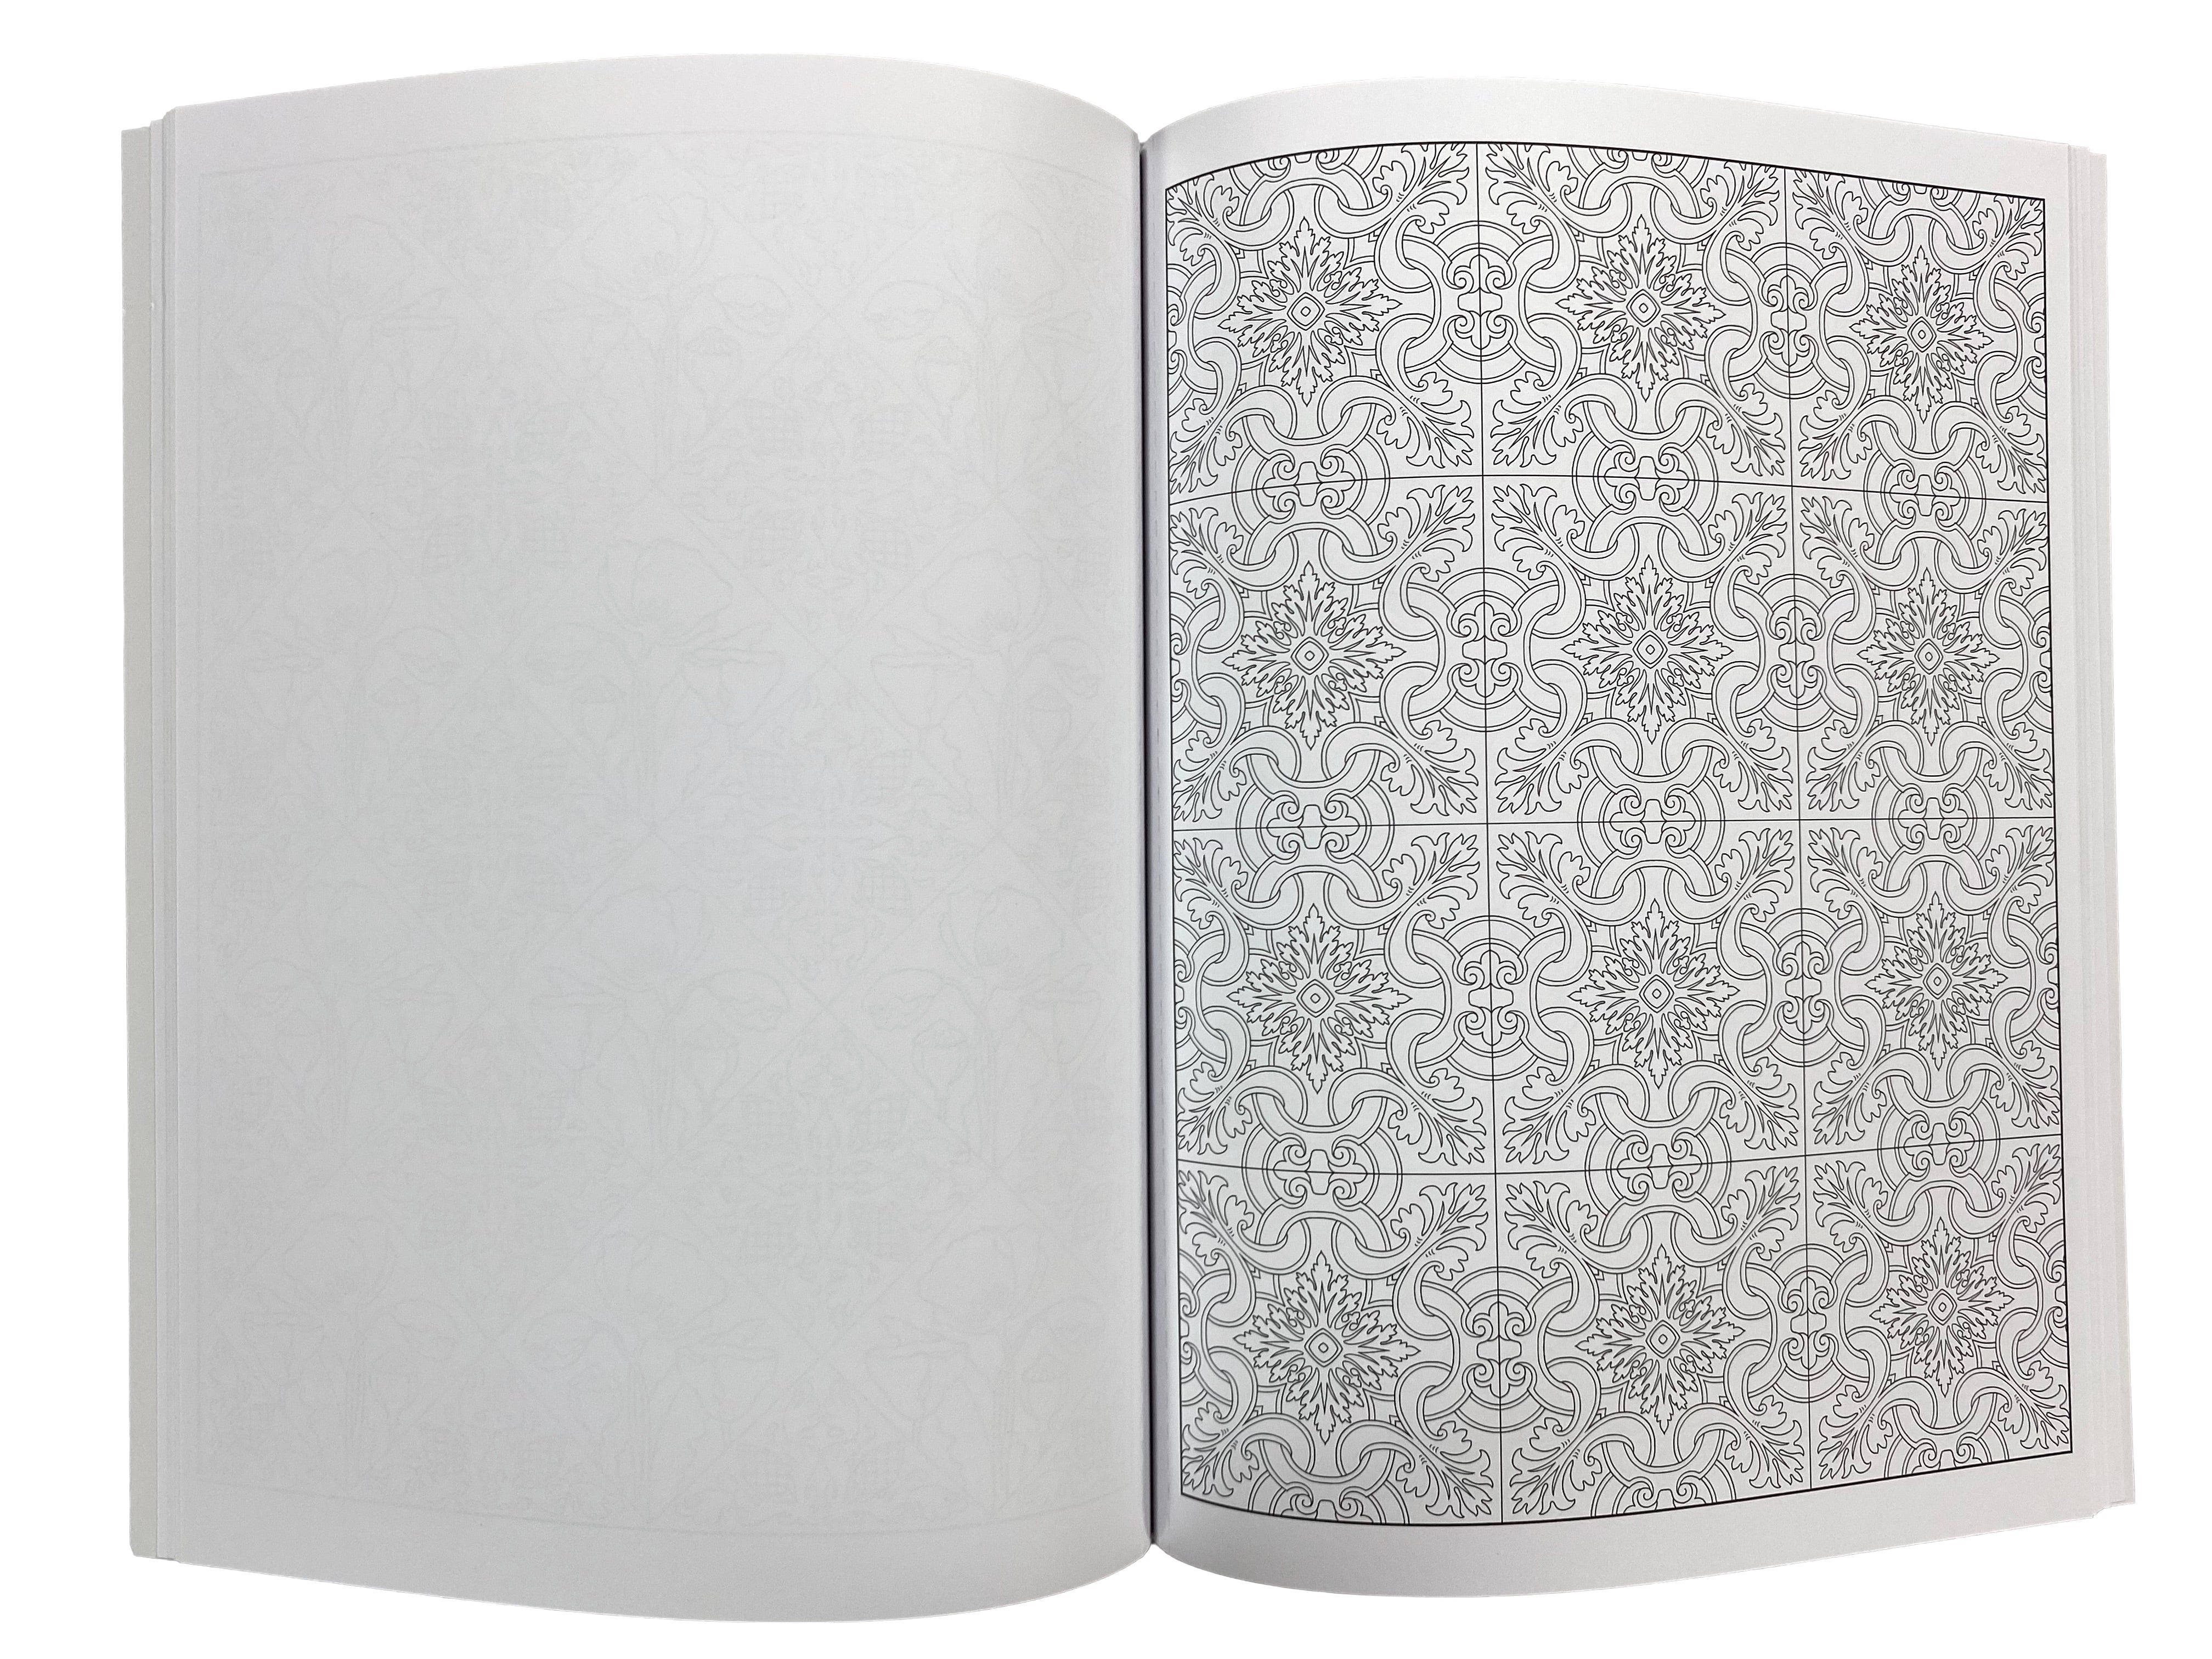 Elegant Tile Designs Creative Haven Coloring Book    